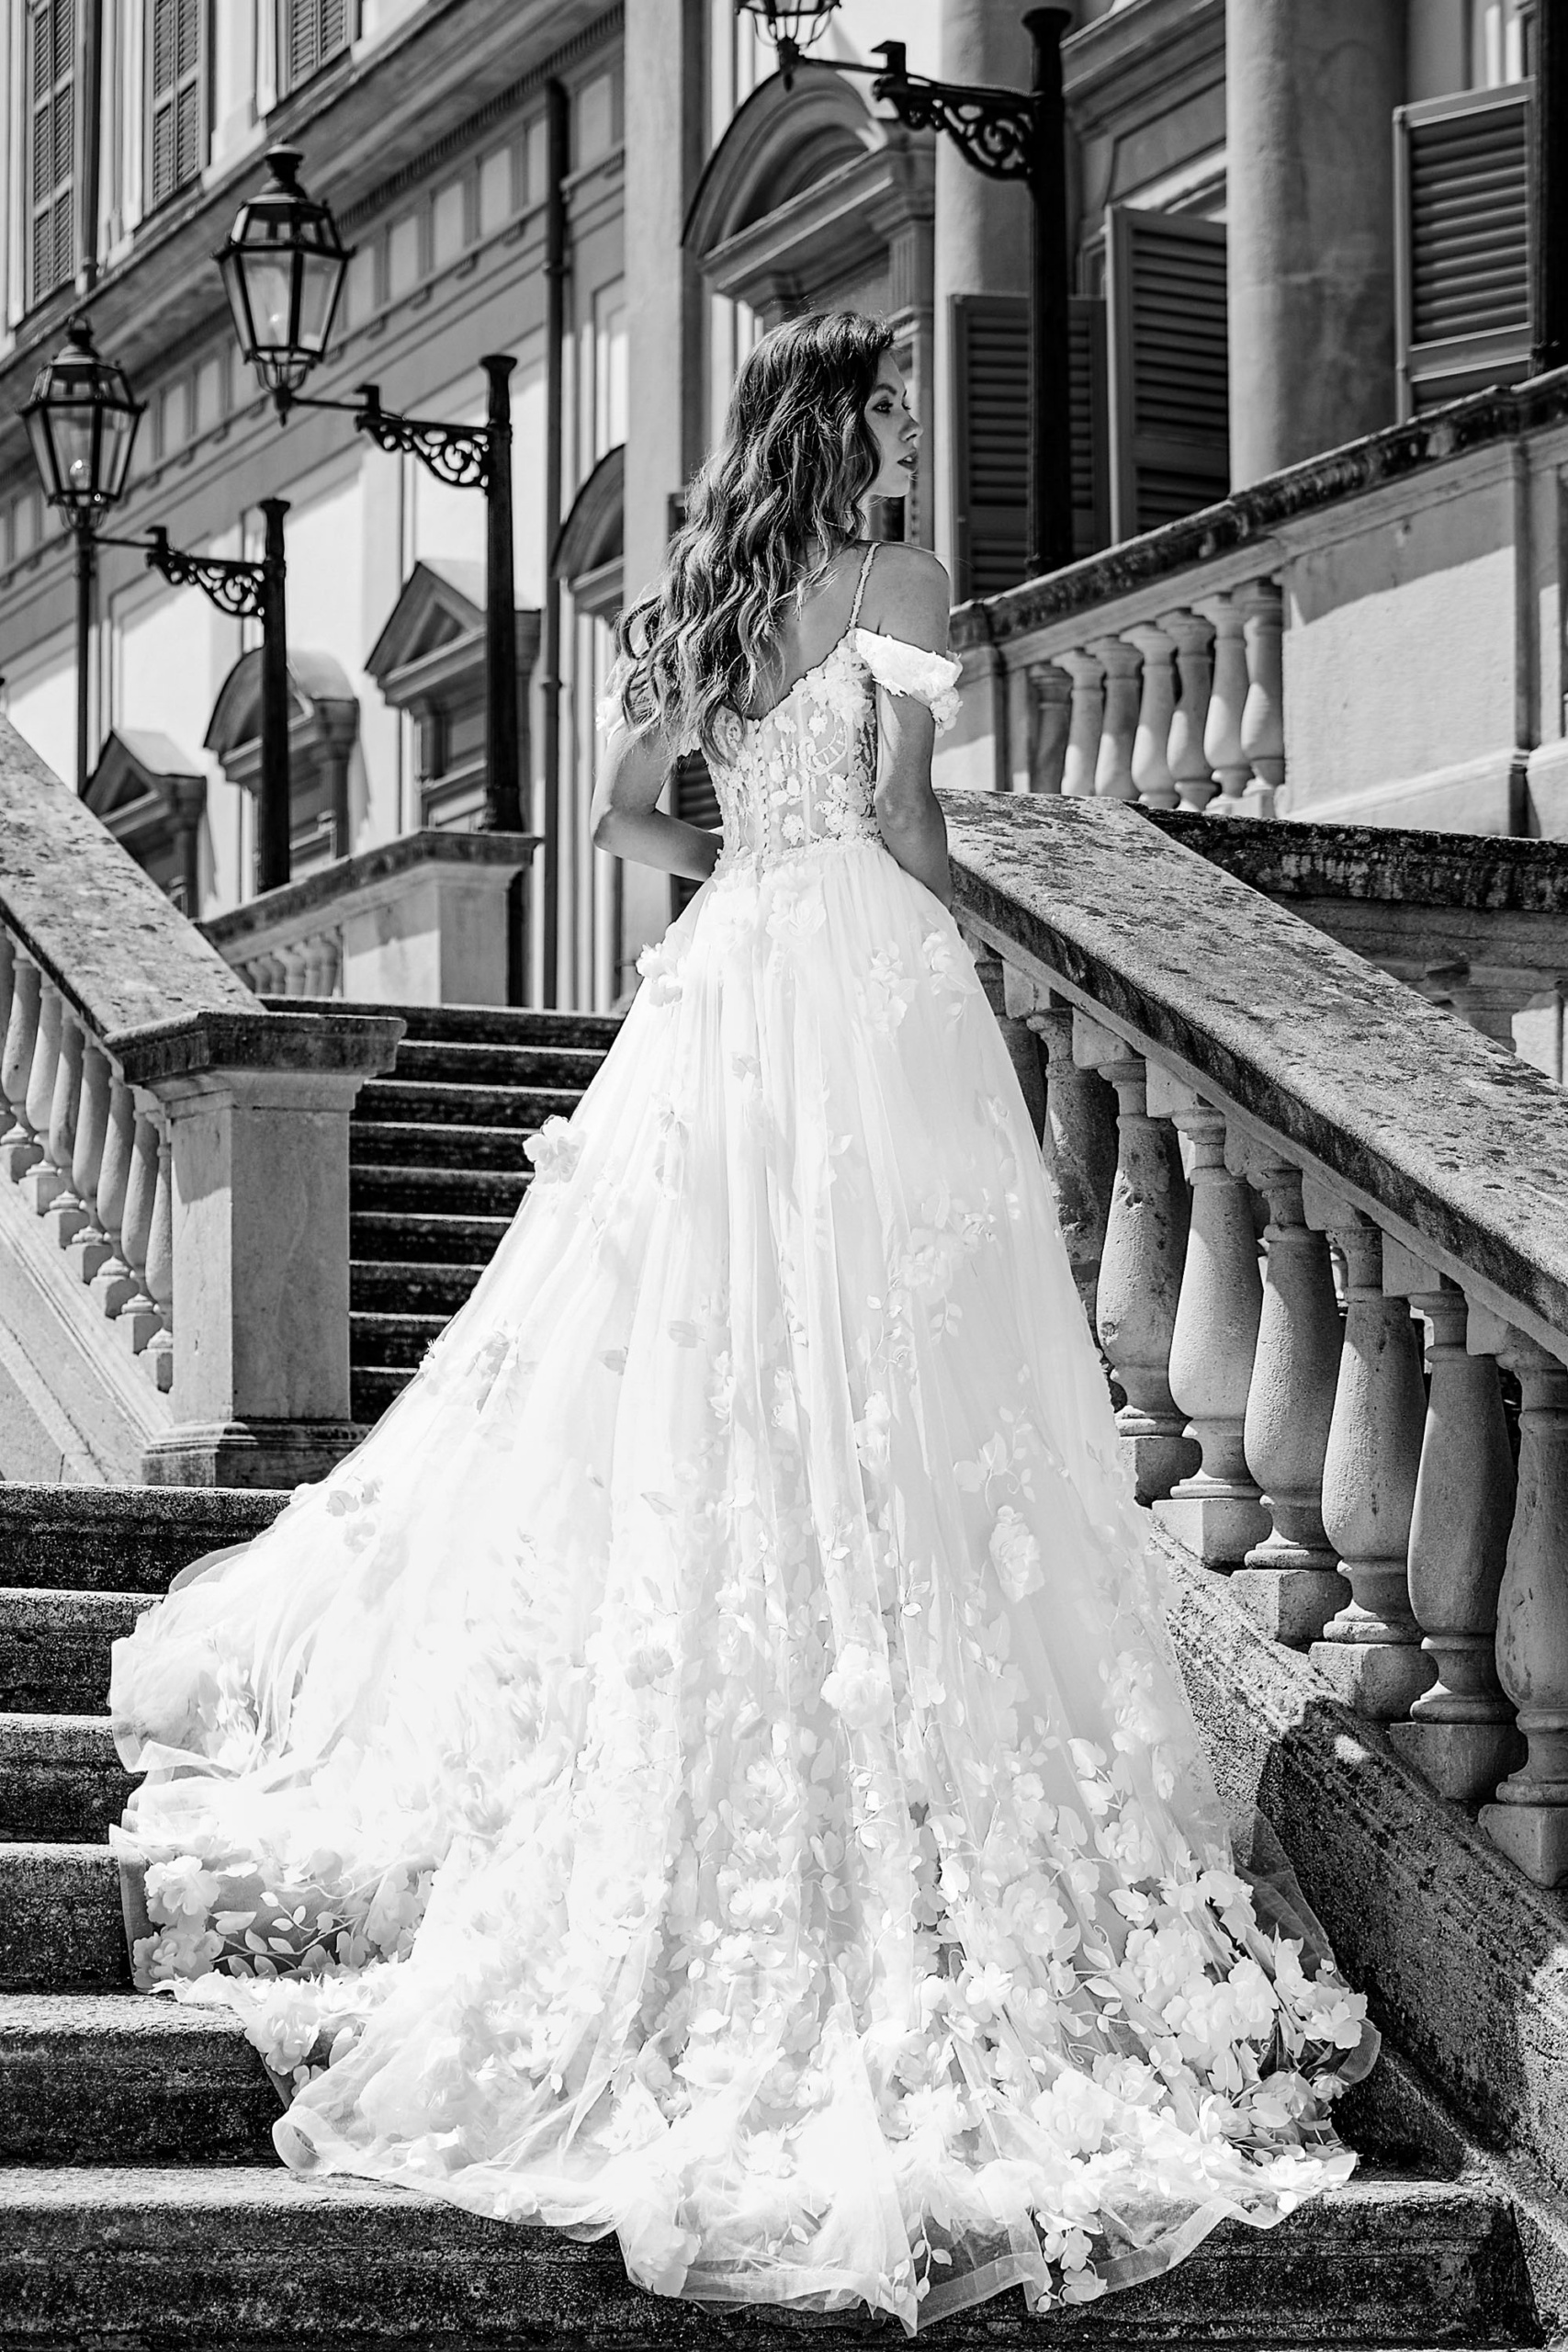 Atelier Wedding Dresses Reggio Calabria: The Avant-Garde Vogue Style for a Dream Bride - Discover Haute Couture for Your Wedding